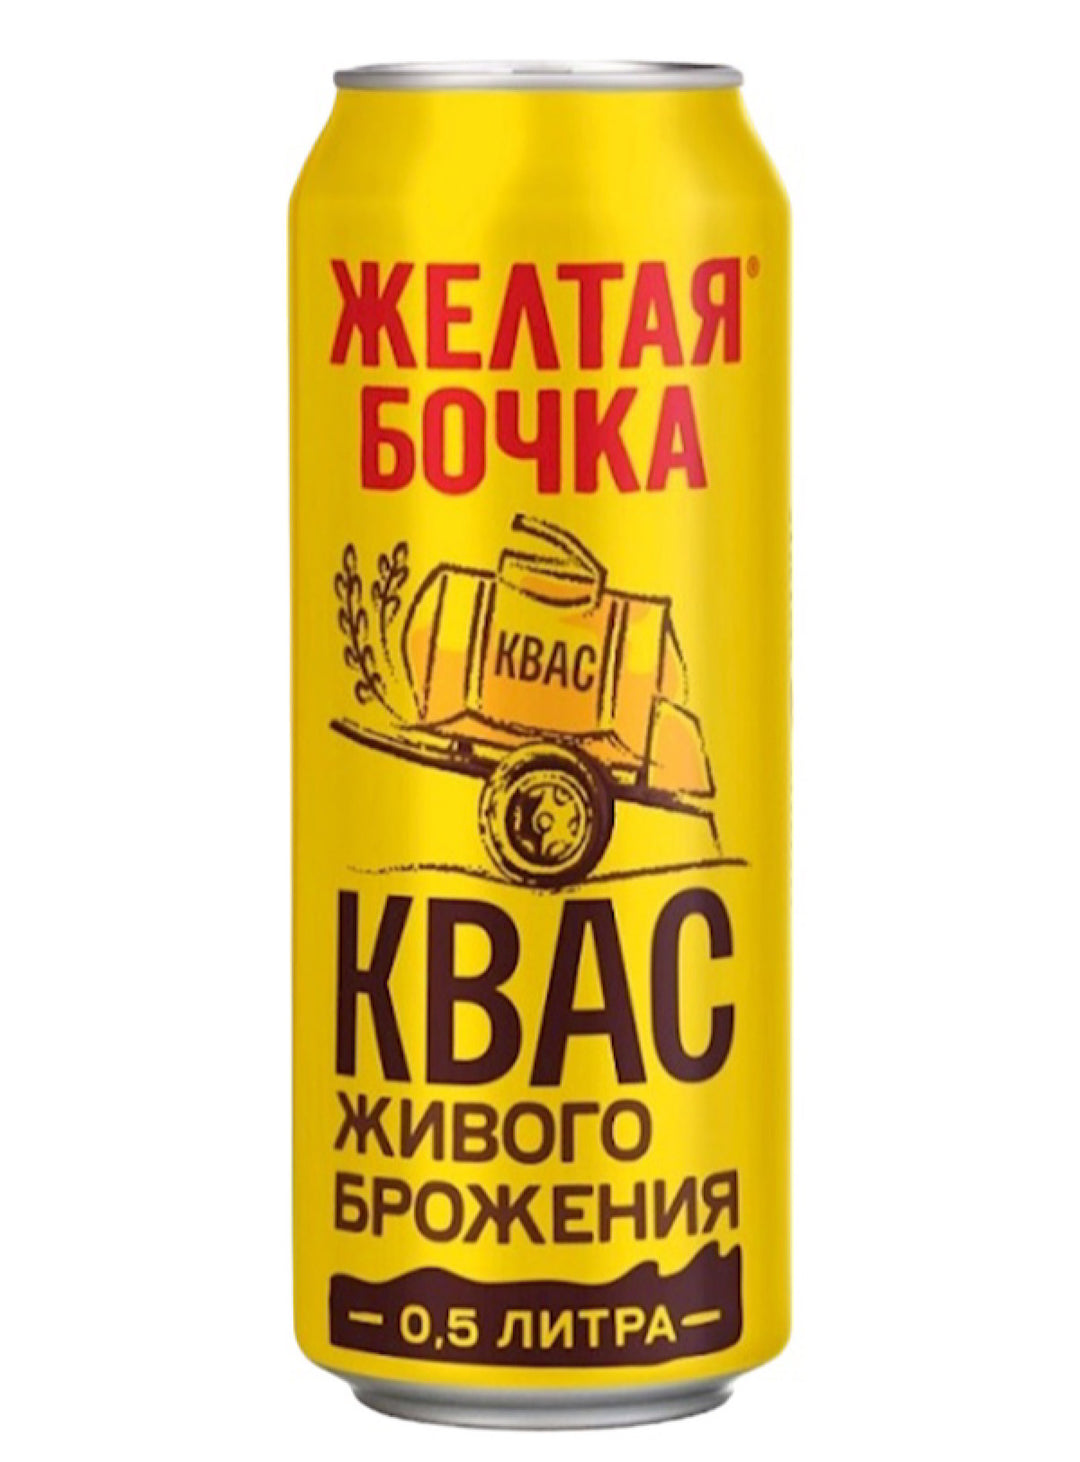 Kvass - Yellow Barrel - 0.5 liters